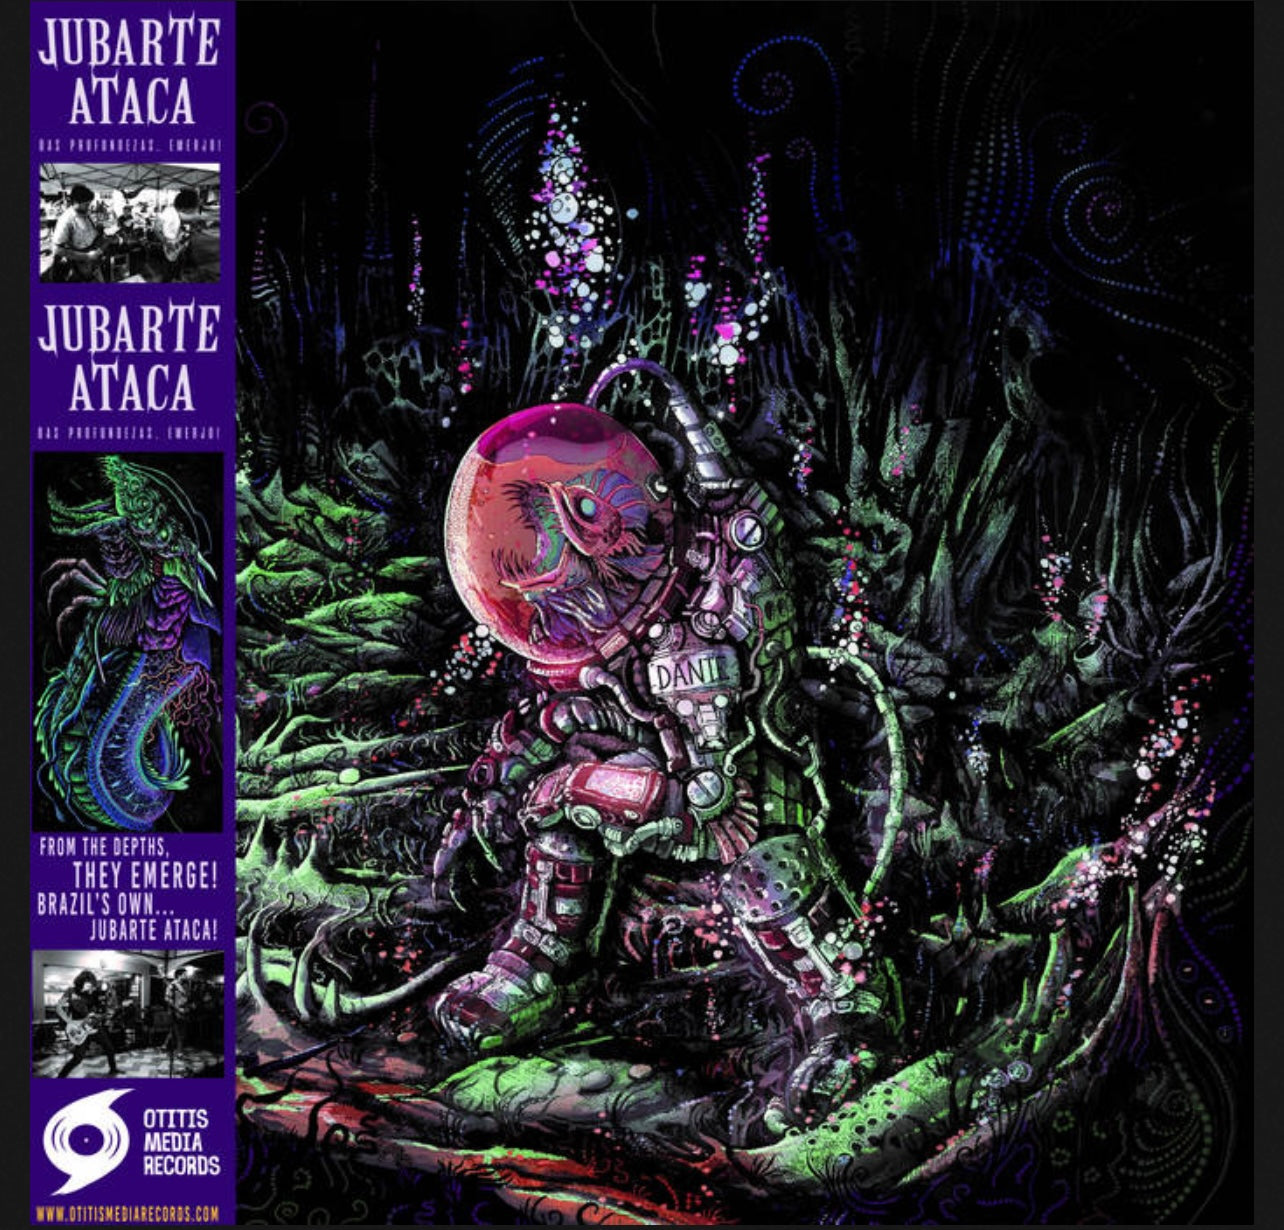 OMR-041 JUBARTE ATACA “Das Profundezas, Emerjo!” 12 inch Vinyl LP (Colored)